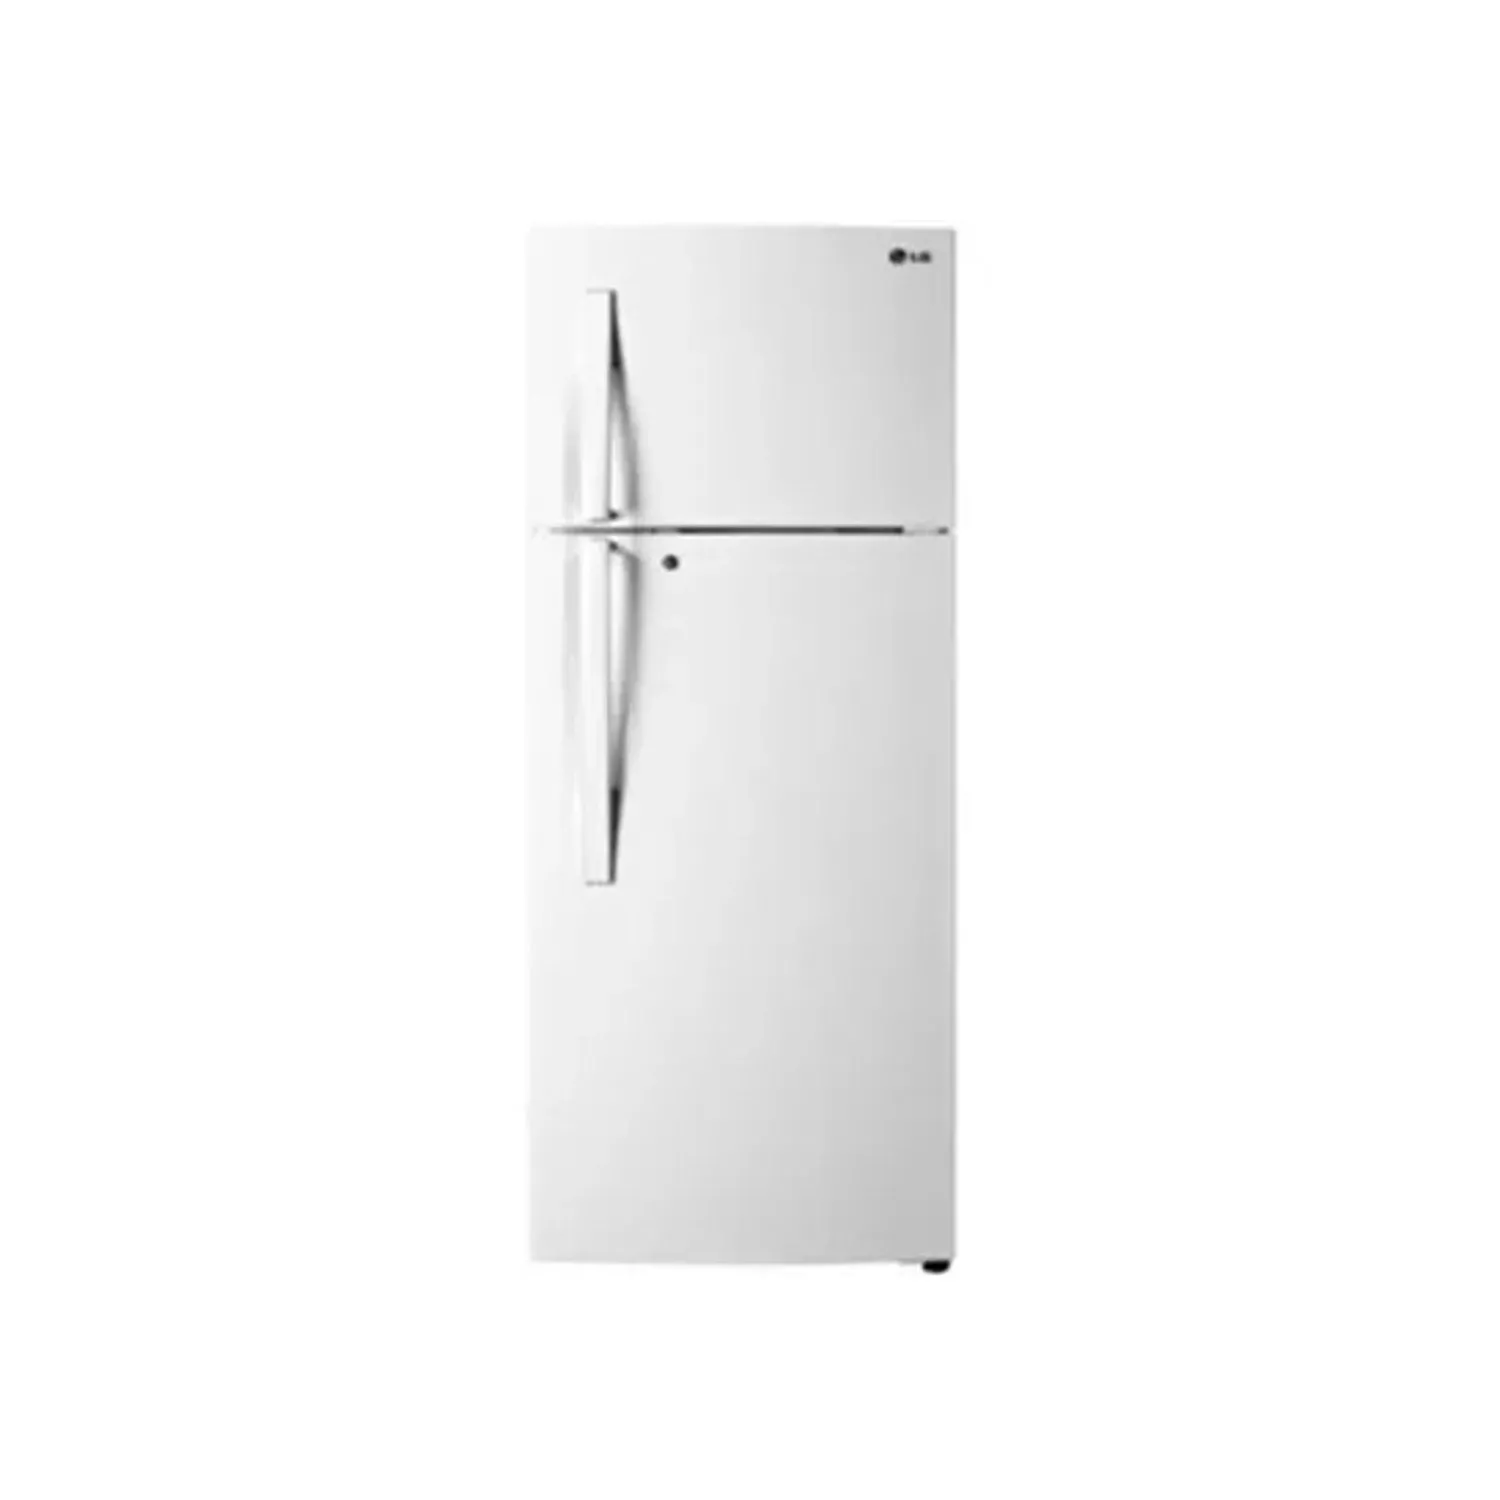 LG 372 Liter Refrigerator Double Door Inverter Compressor White Model GLG372RQBB | 1 Year Full 5 Years Compressor Warranty.